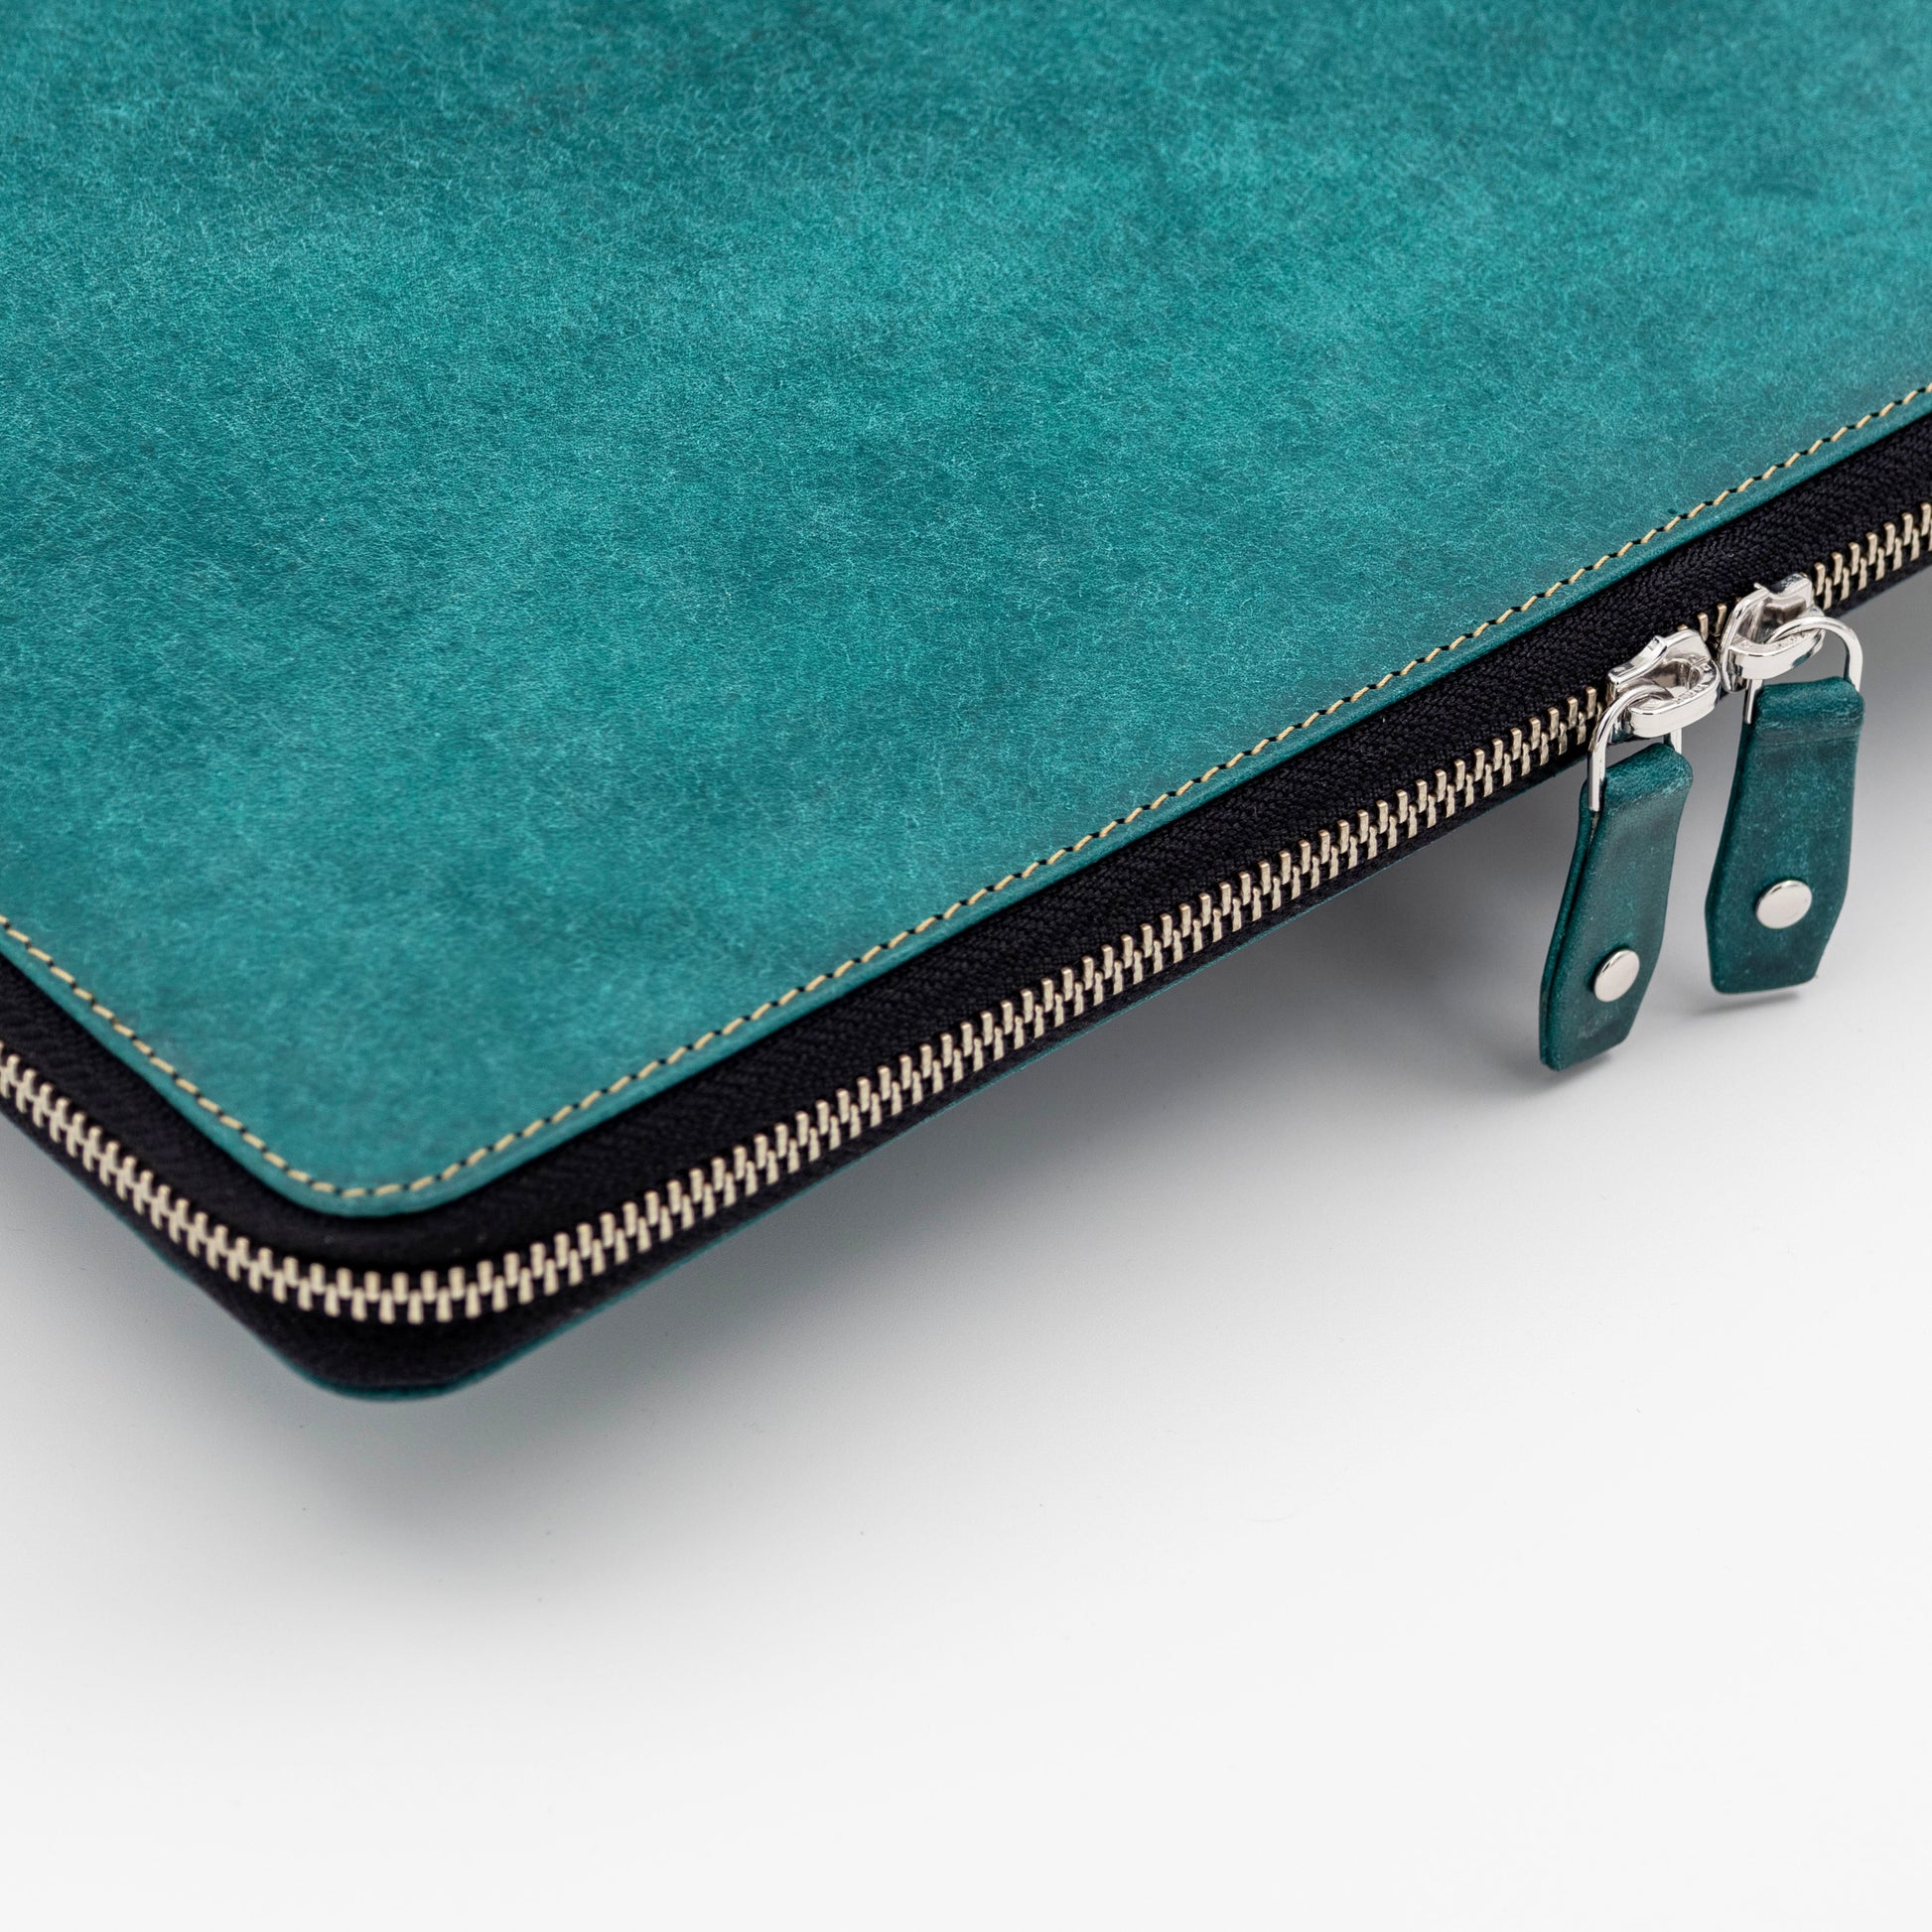 Laptop Case designed in pueblo Ortensia vegetable tanned leather